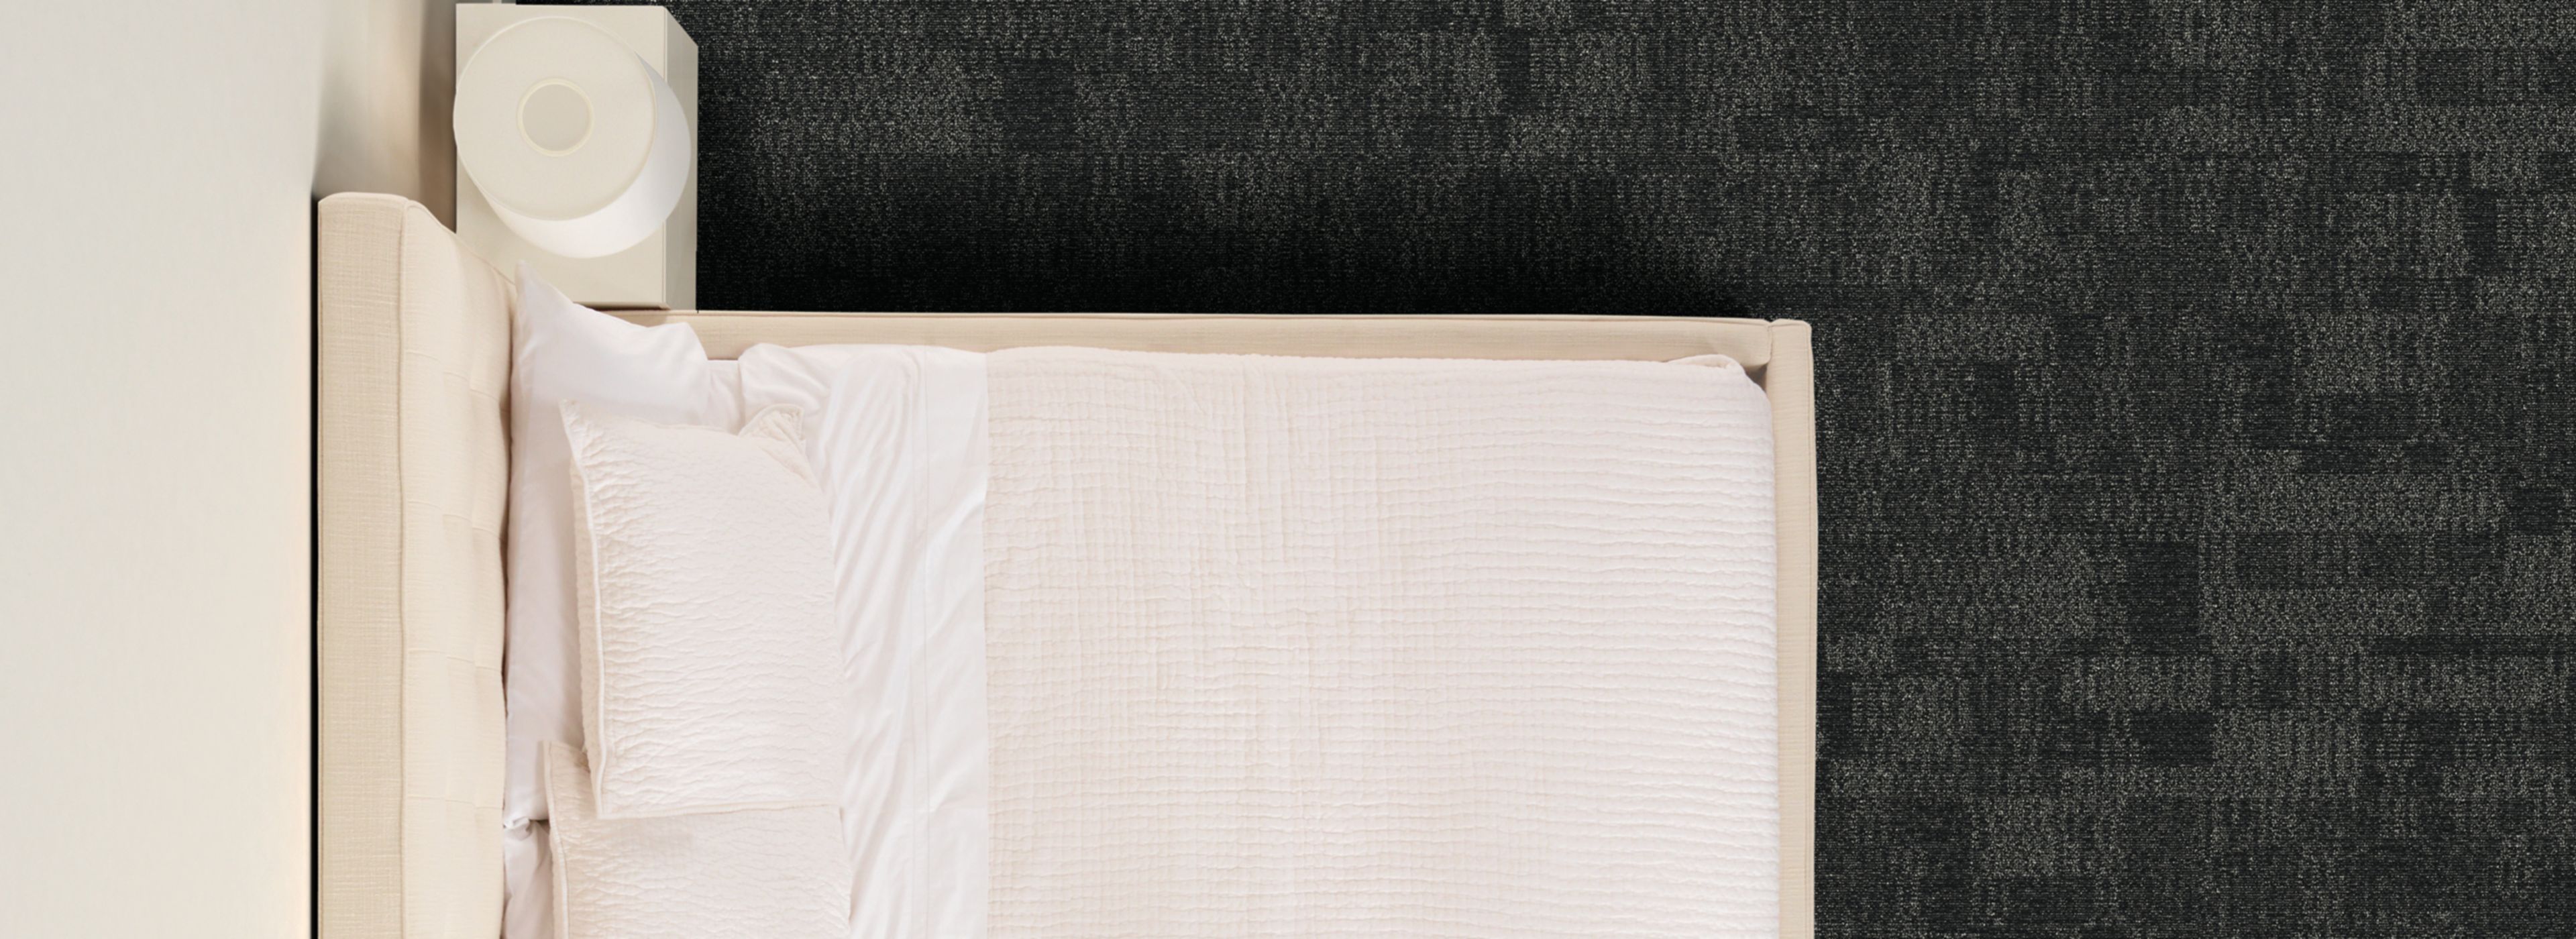 RMS 705 plank carpet tile and Studio Set LVT in hotel guest room numéro d’image 1